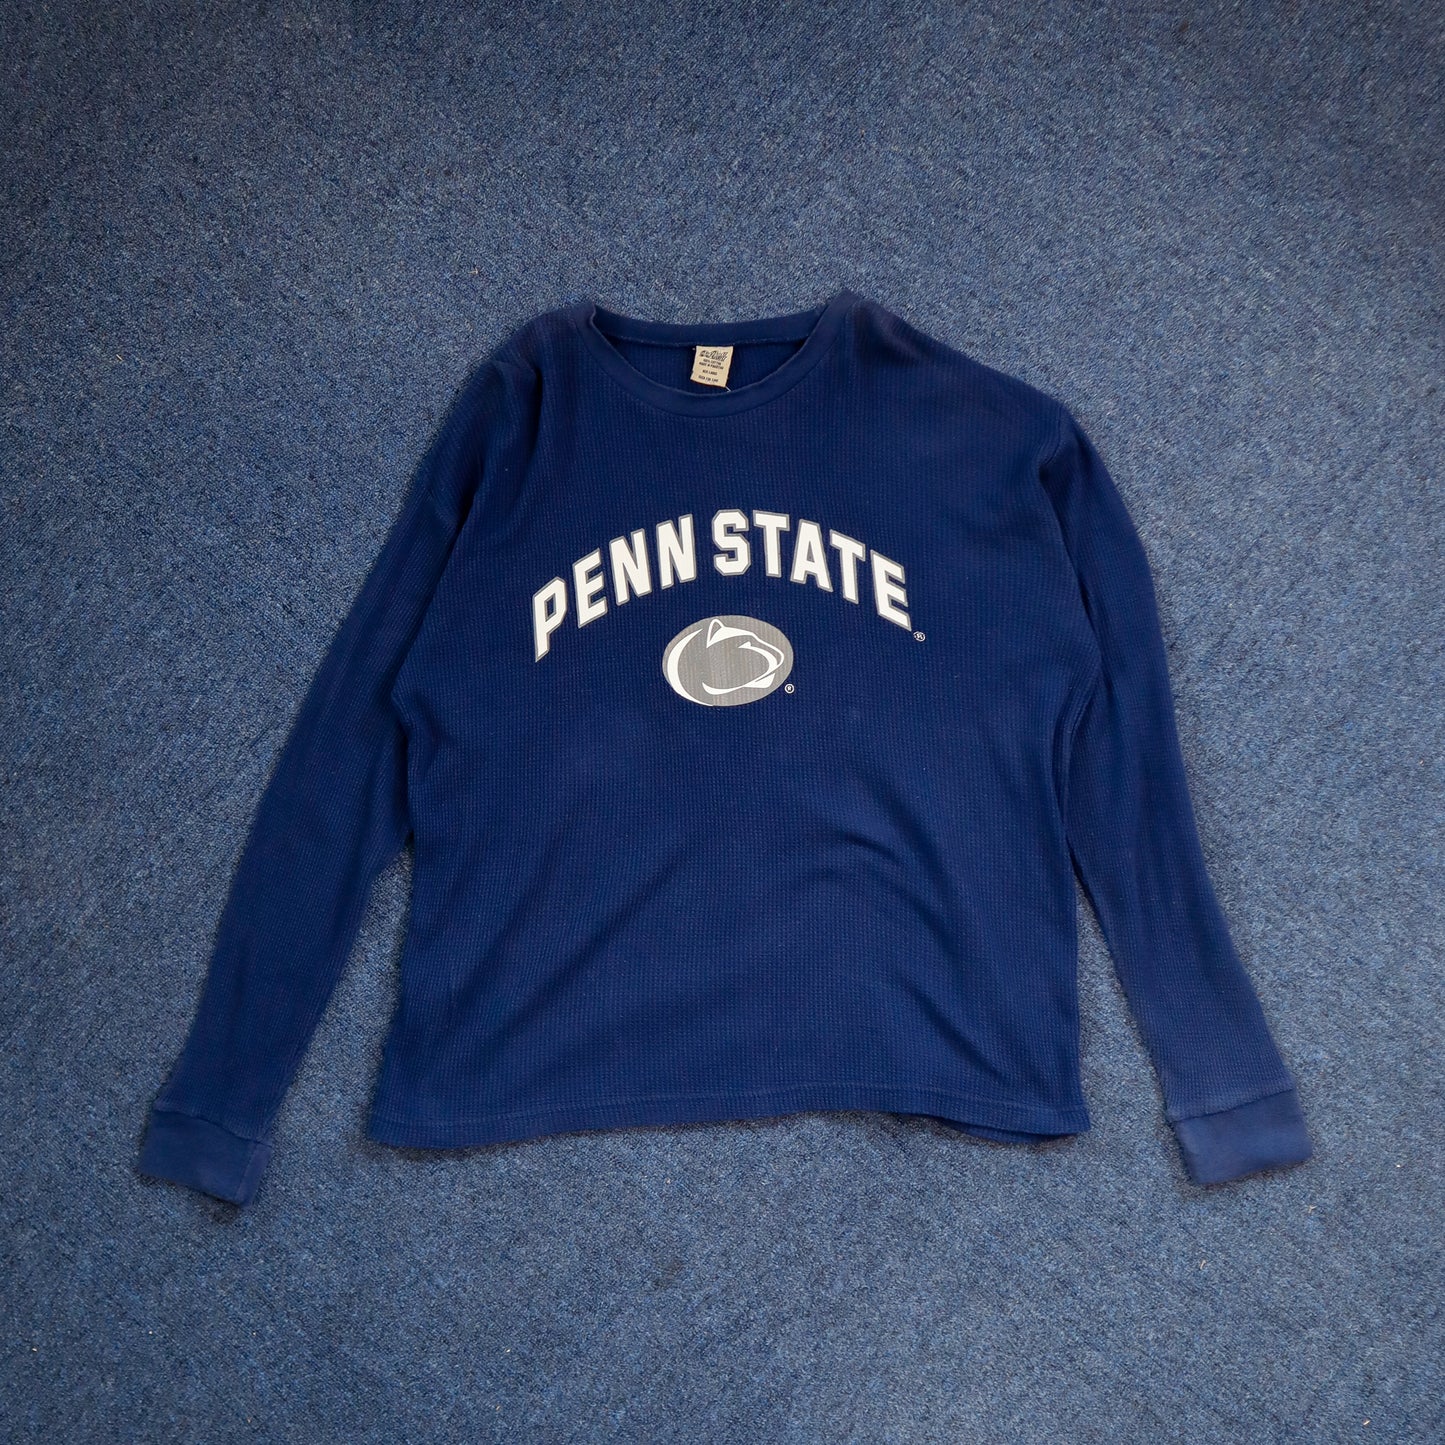 Vintage Penn State Sweater